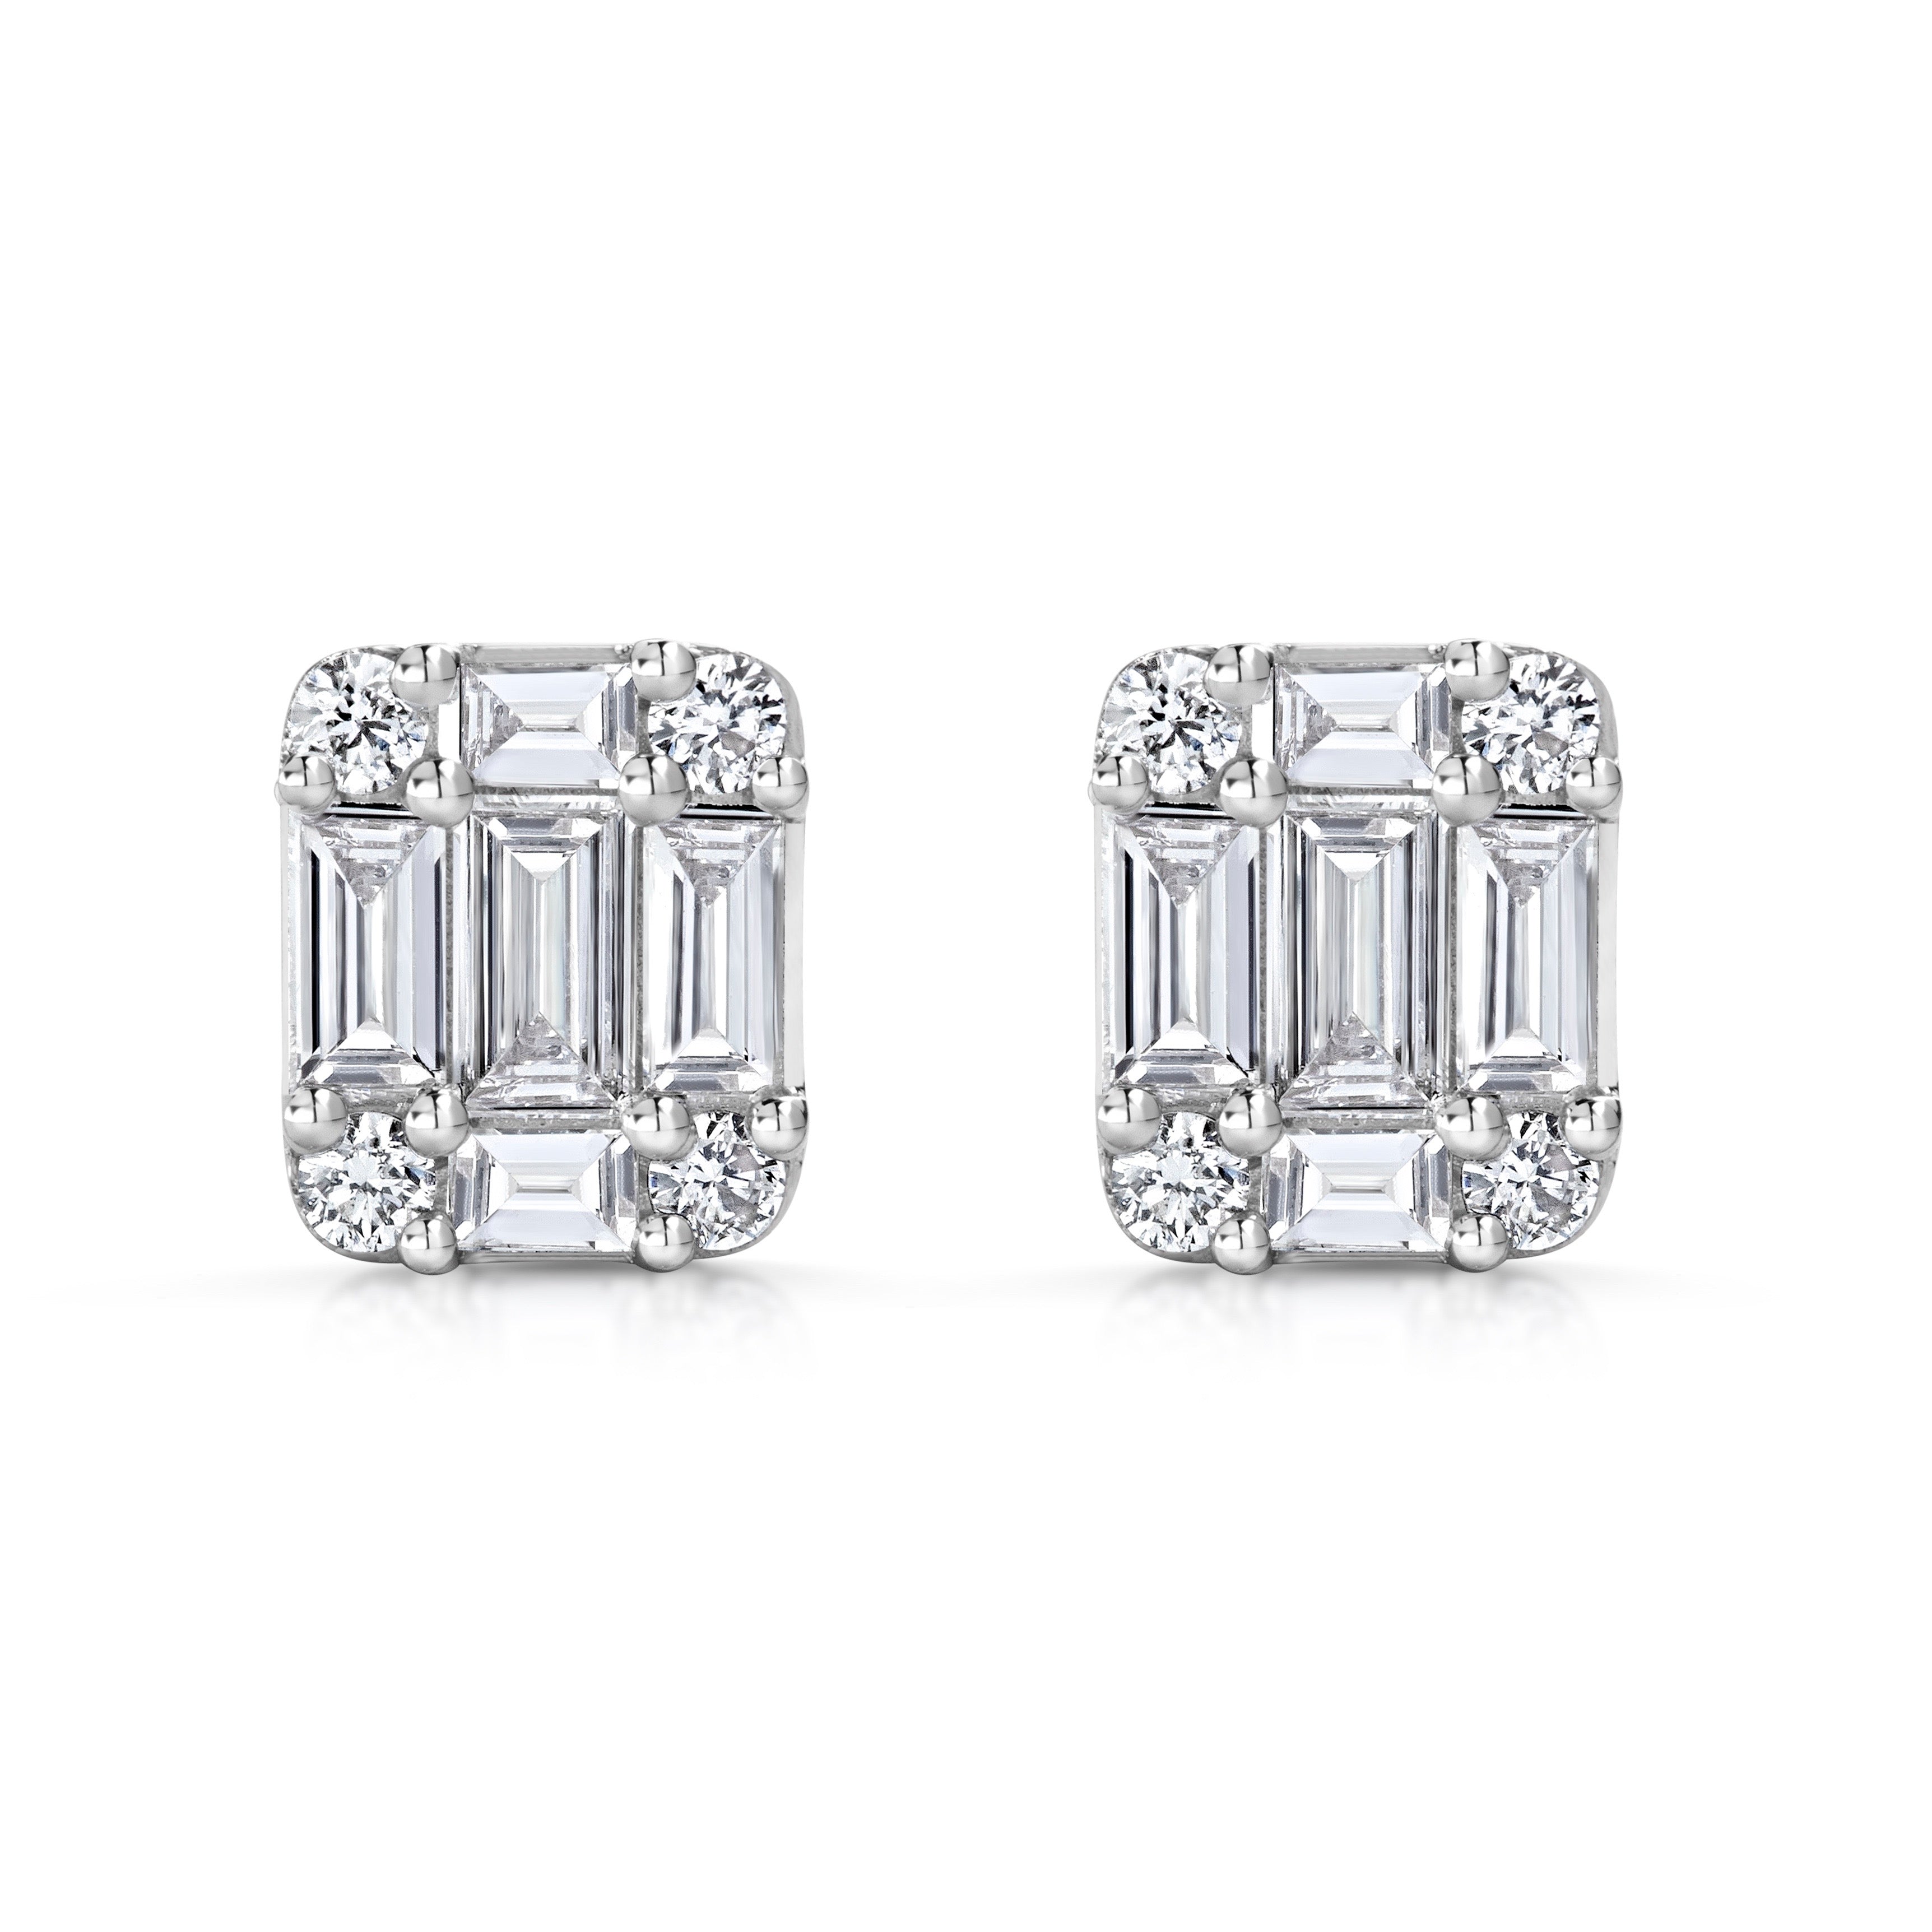 CHELSEA big diamond earrings